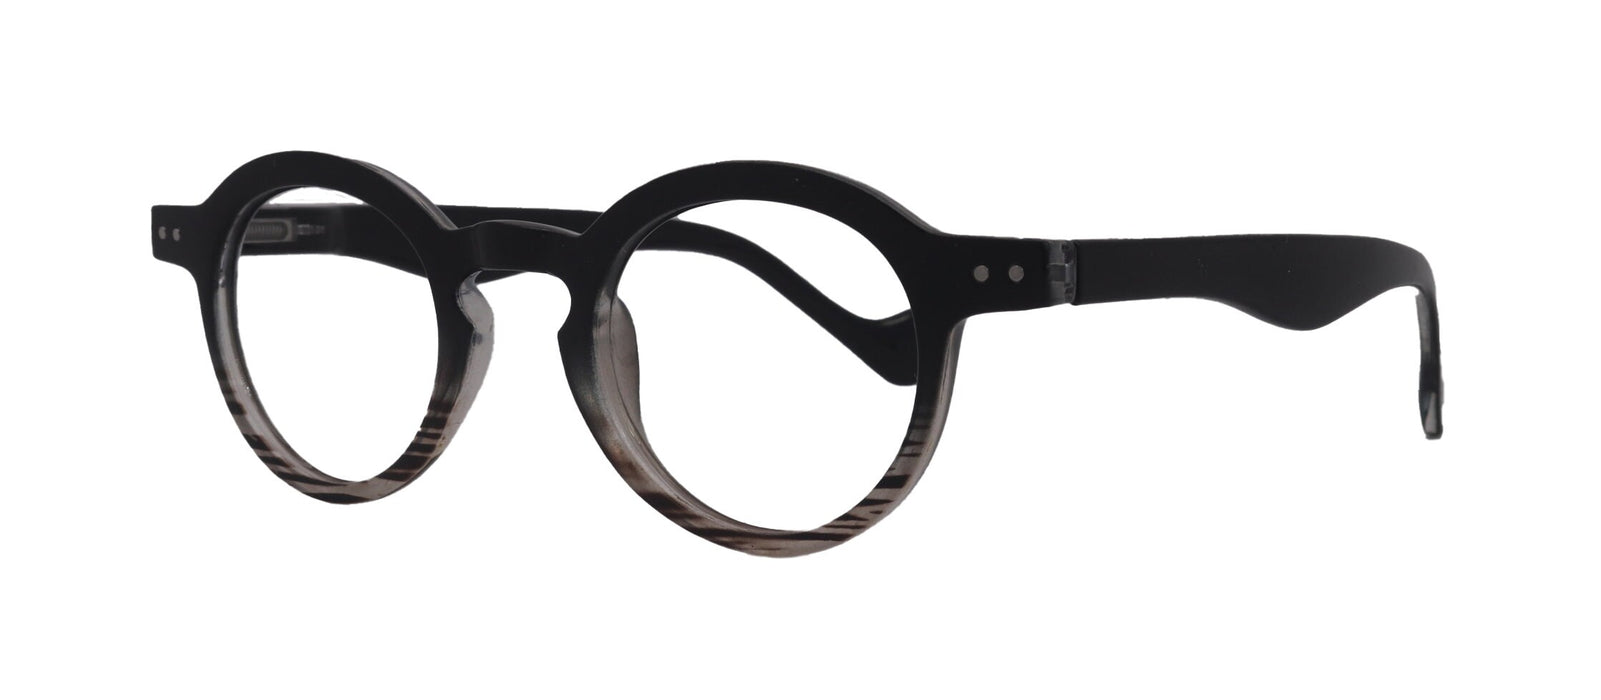 Orlando (Premium) Reading Glasses, High End Readers (Black) (Round) Magnifying Eyeglasses, Optical, NY Fifth Avenue-MER23391BK_275